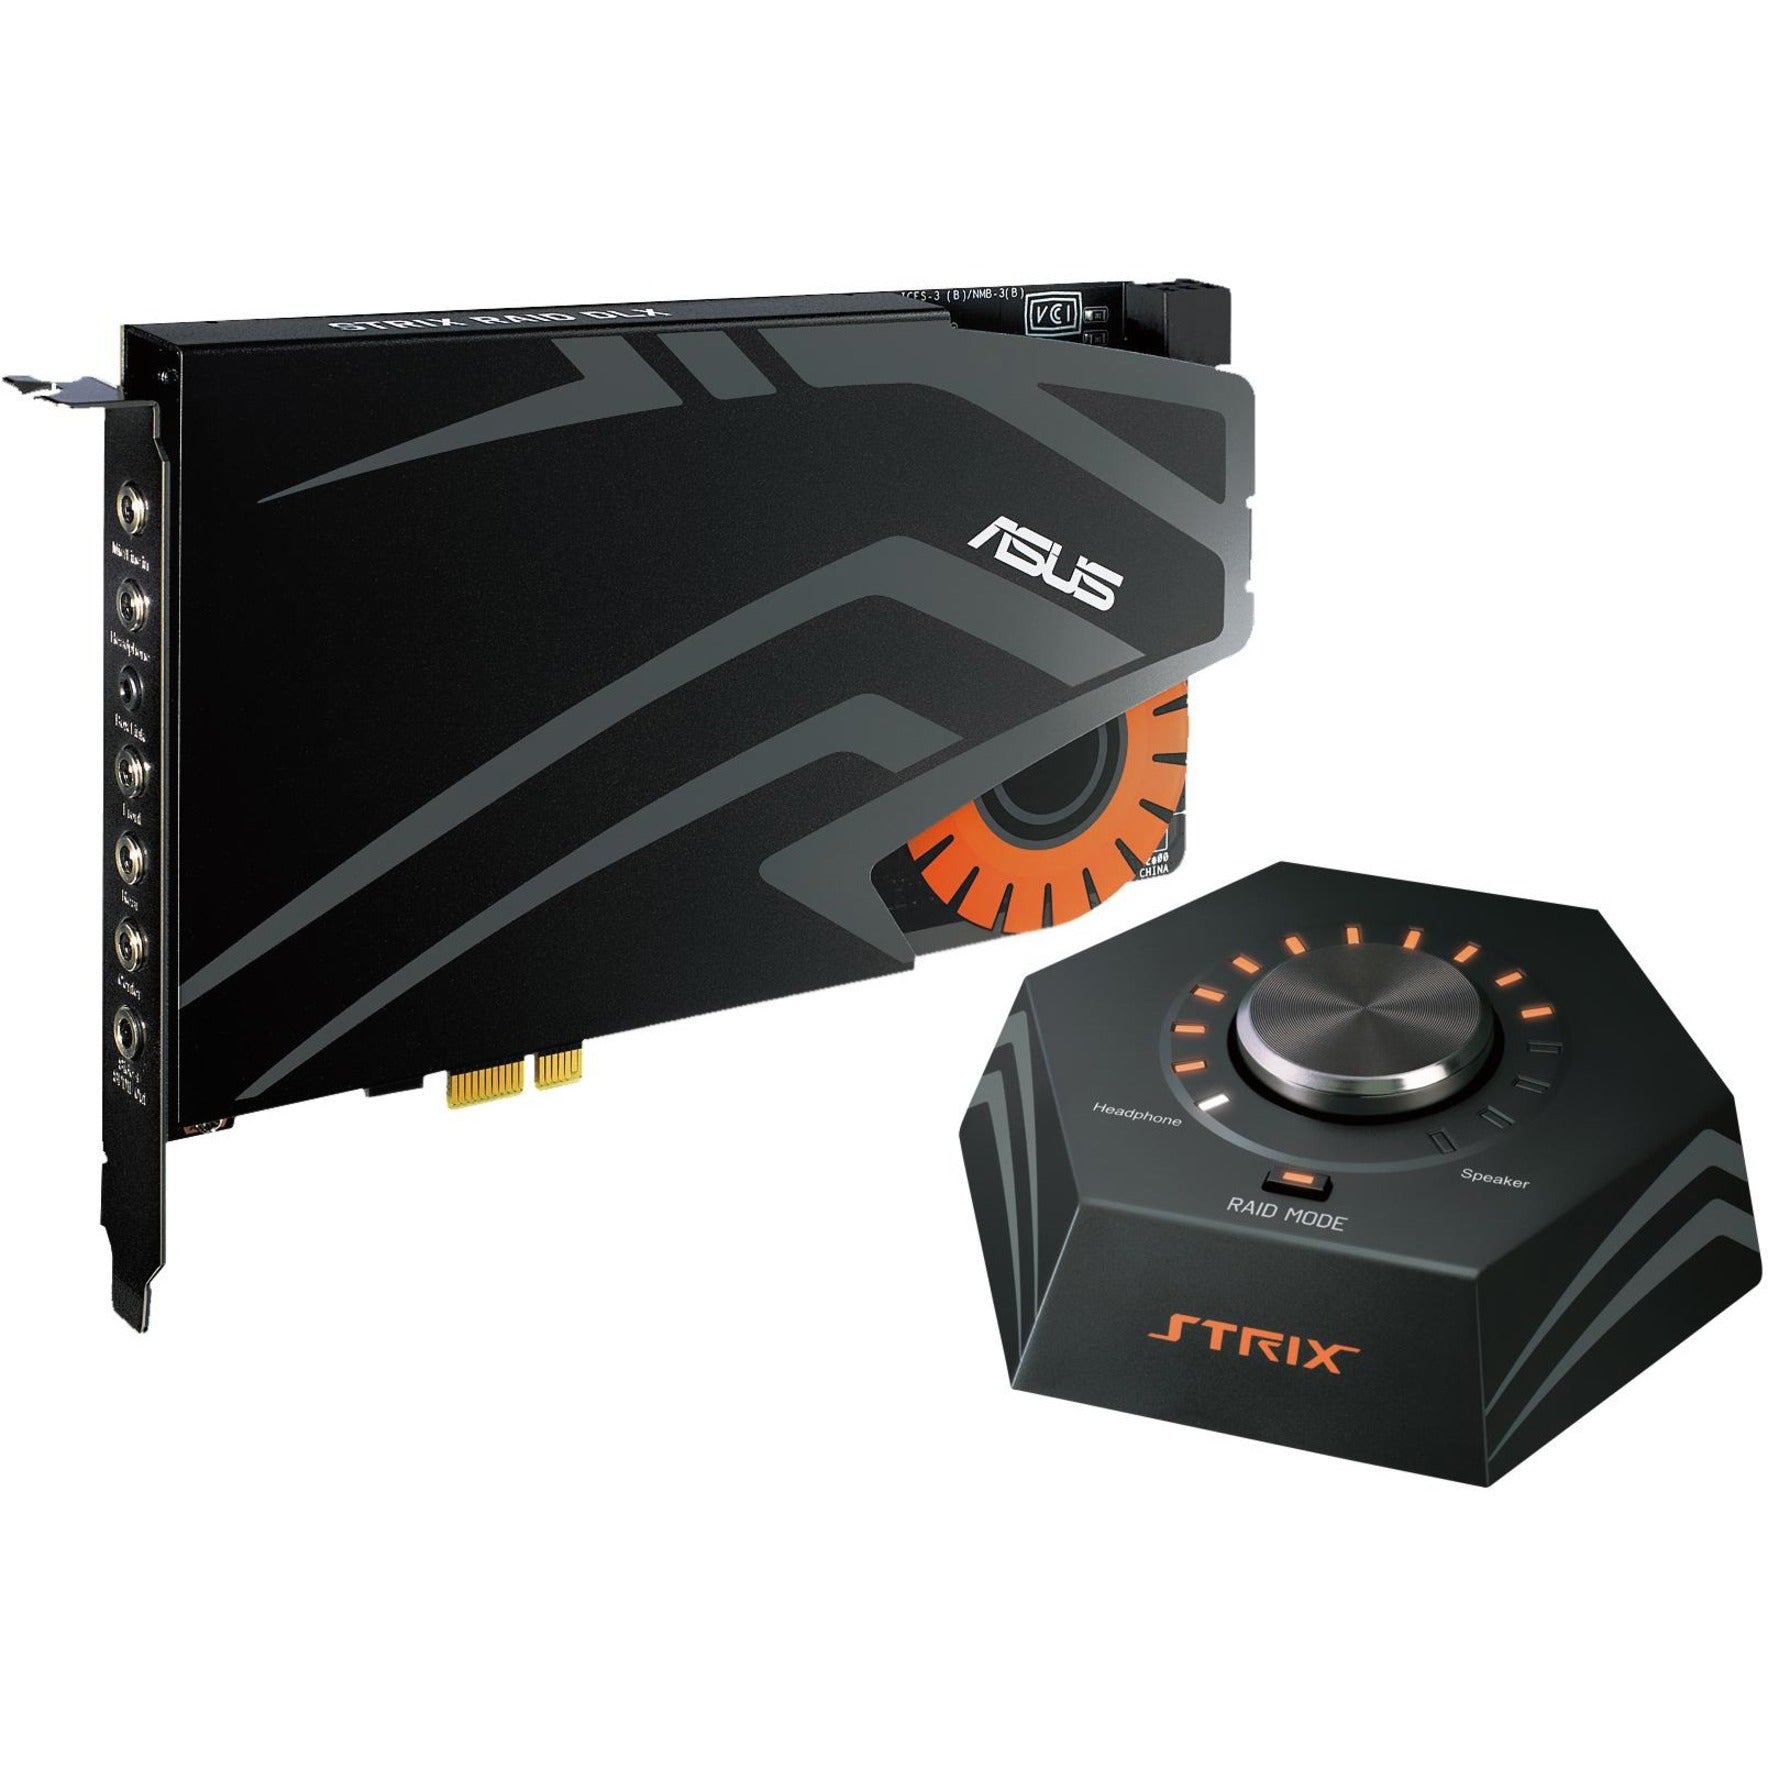 Asus STRIX RAID DLX Sound Board - High-Performance 7.1 Channel PCIe Audio Card